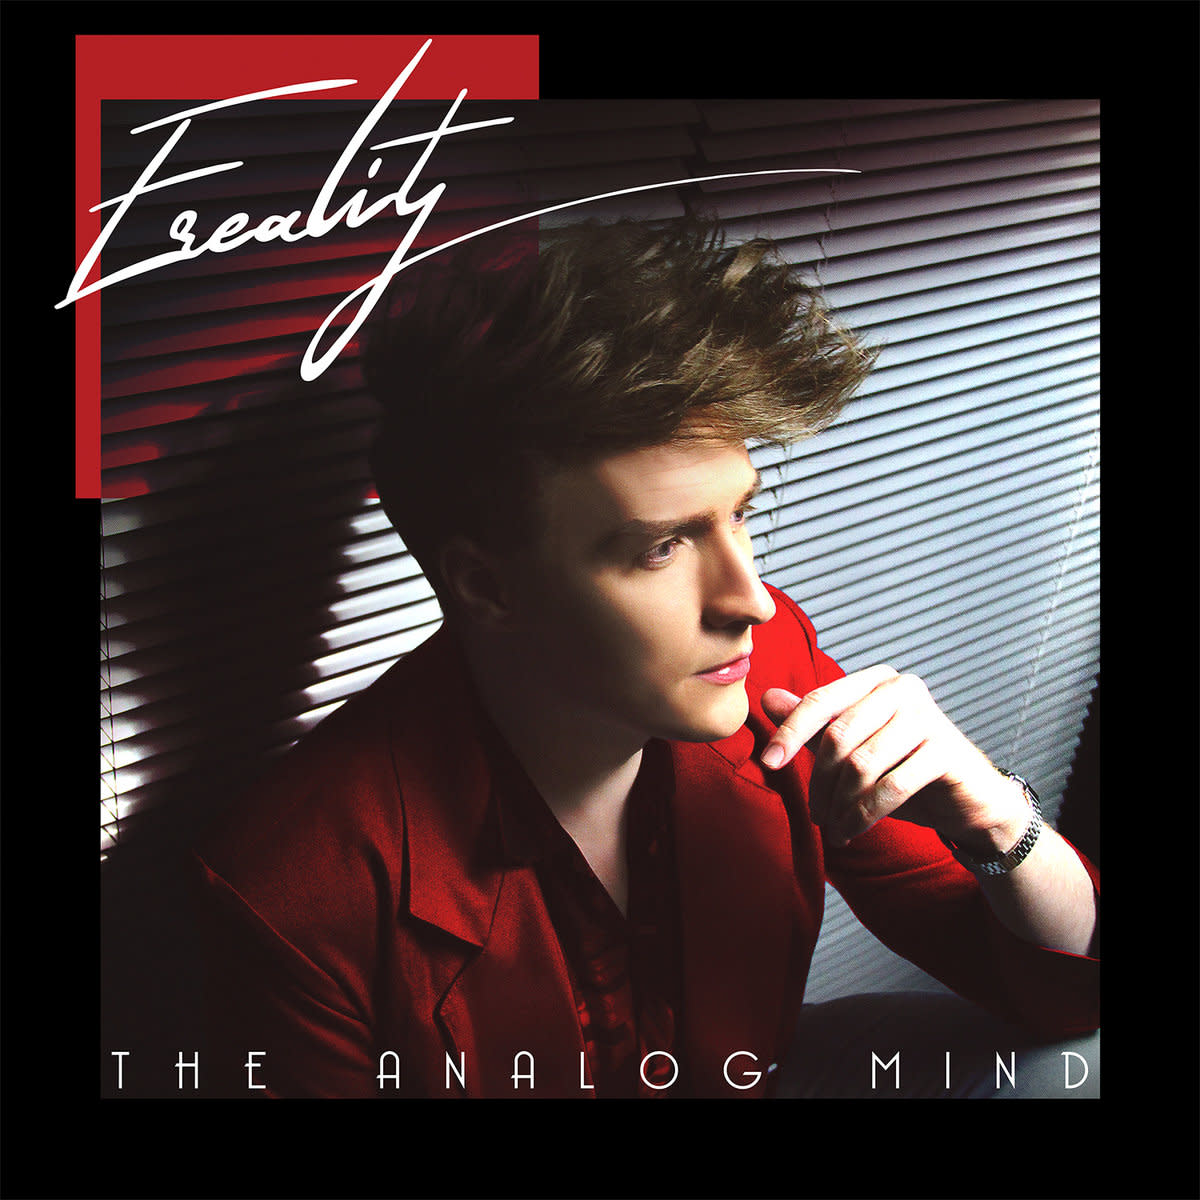 Ereality – "The Analog Mind" EP (2022)